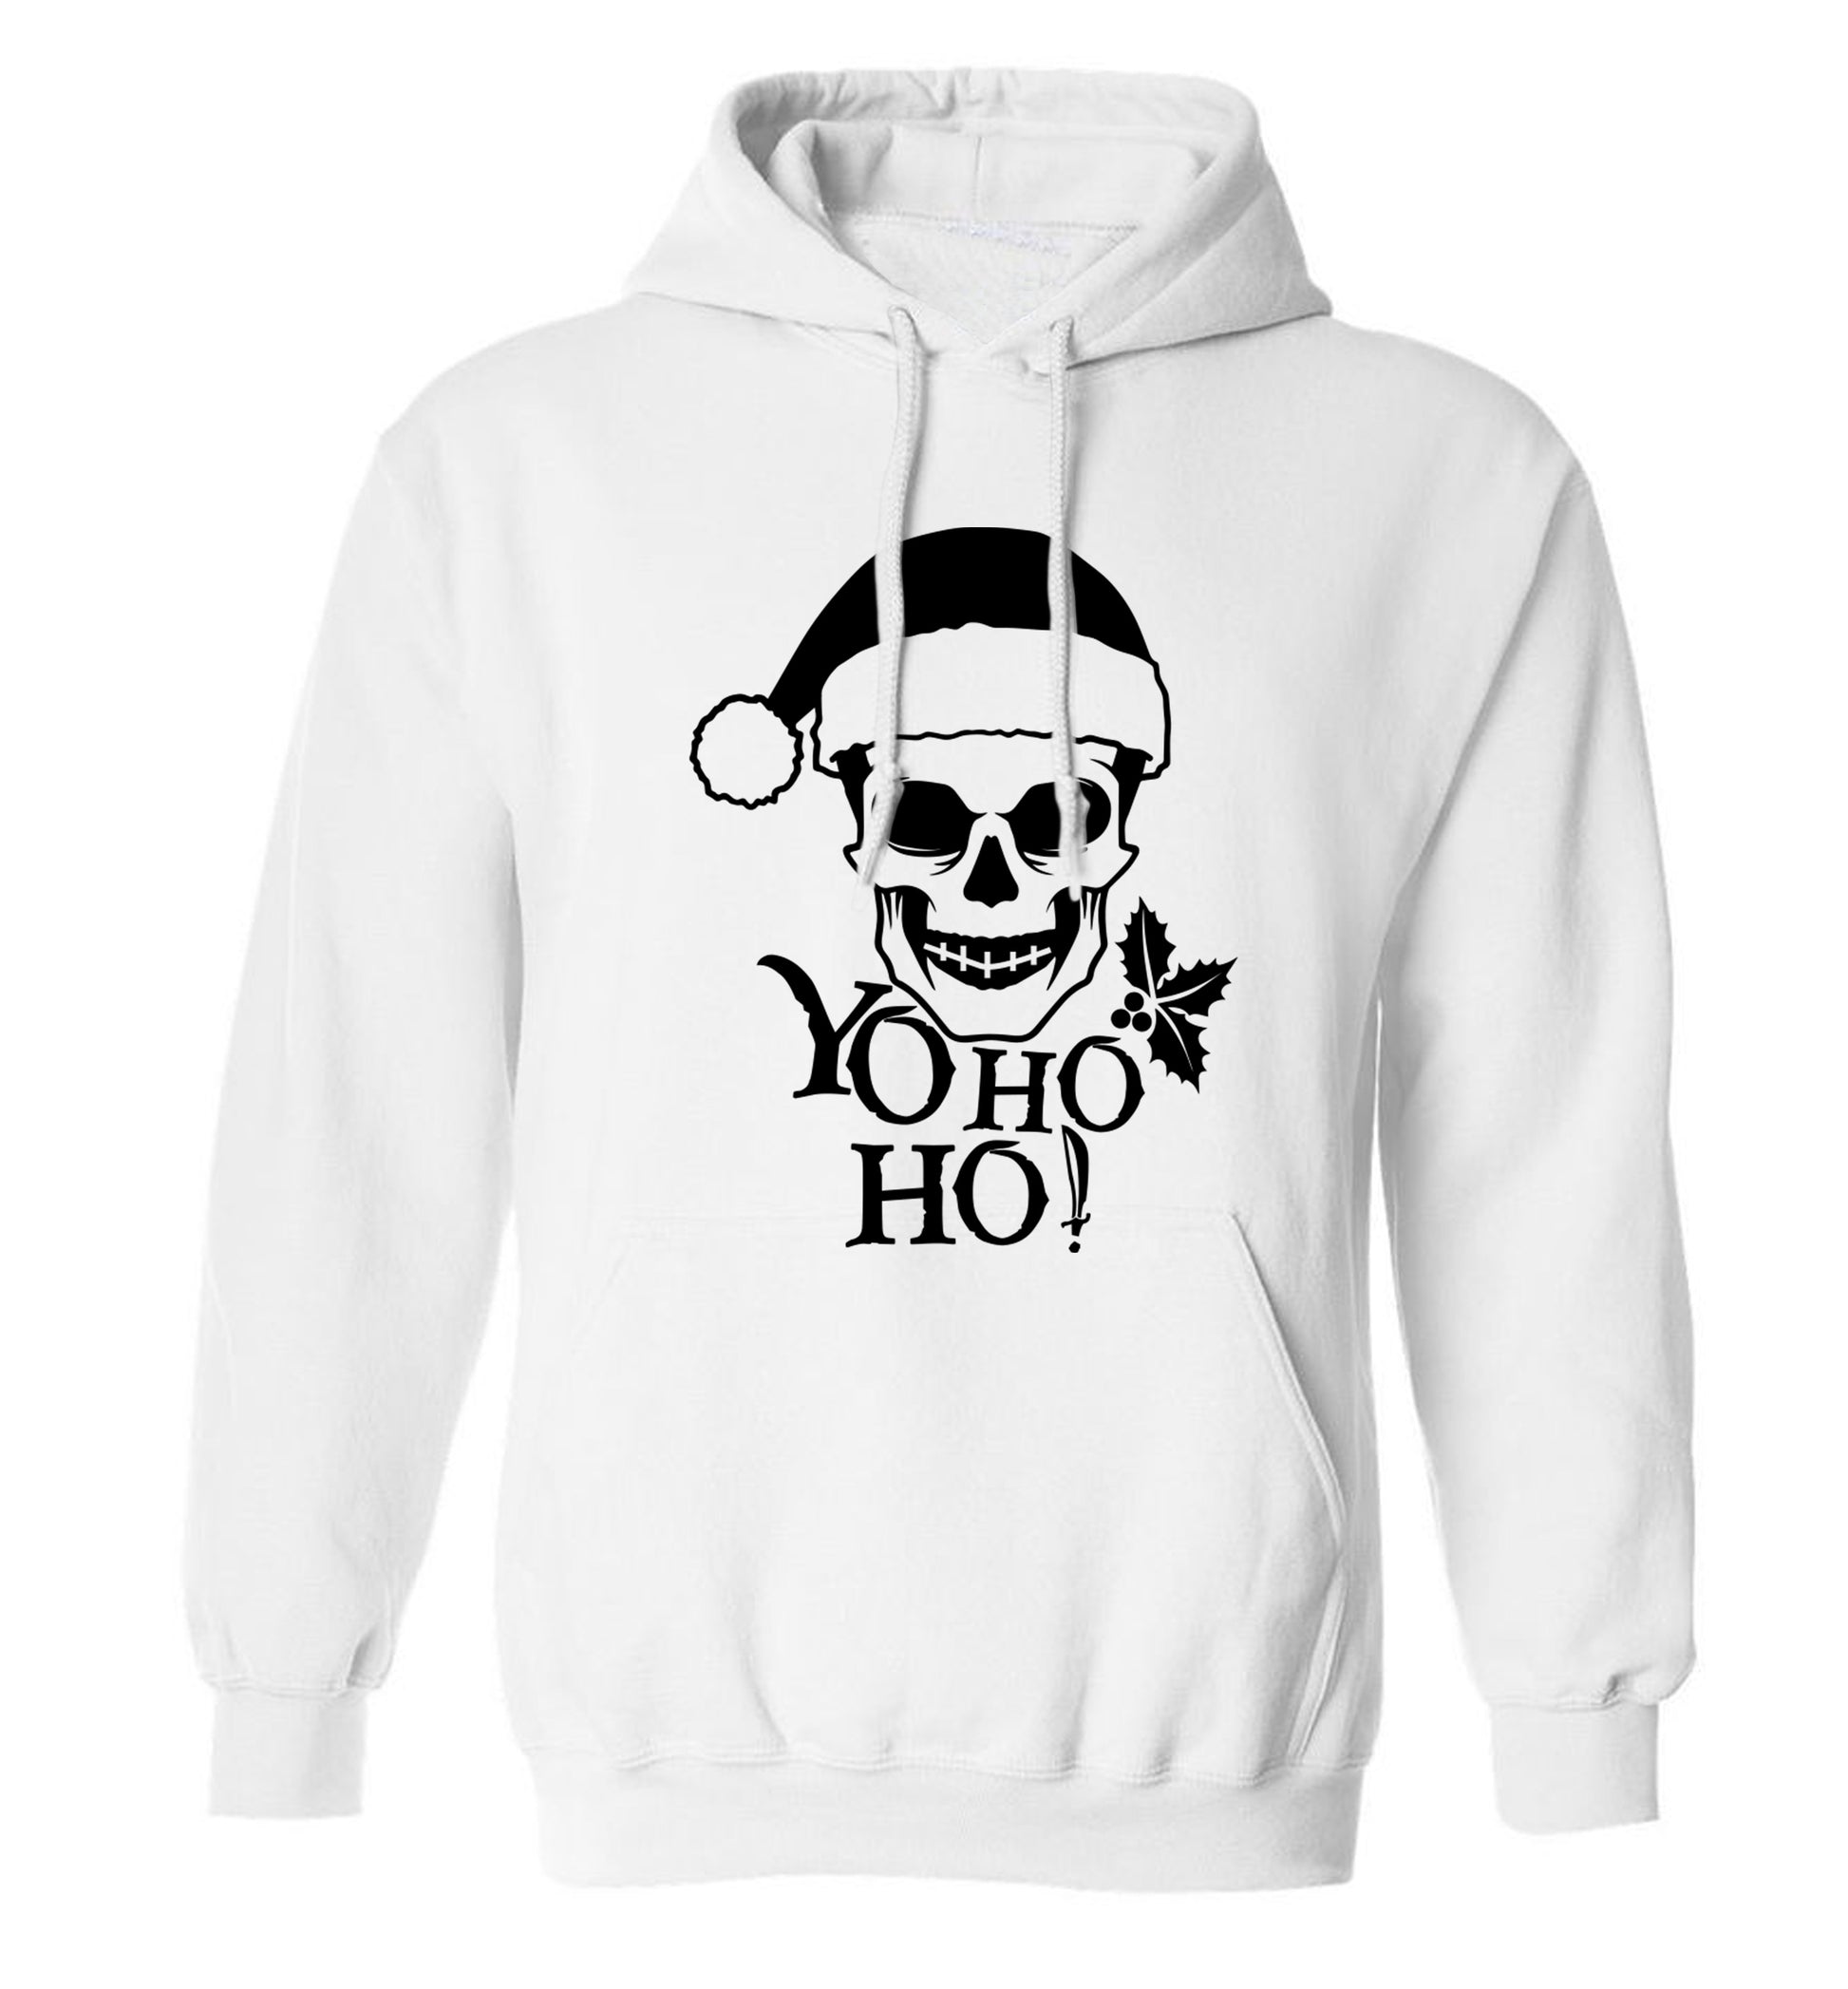 Yo ho ho! adults unisex white hoodie 2XL